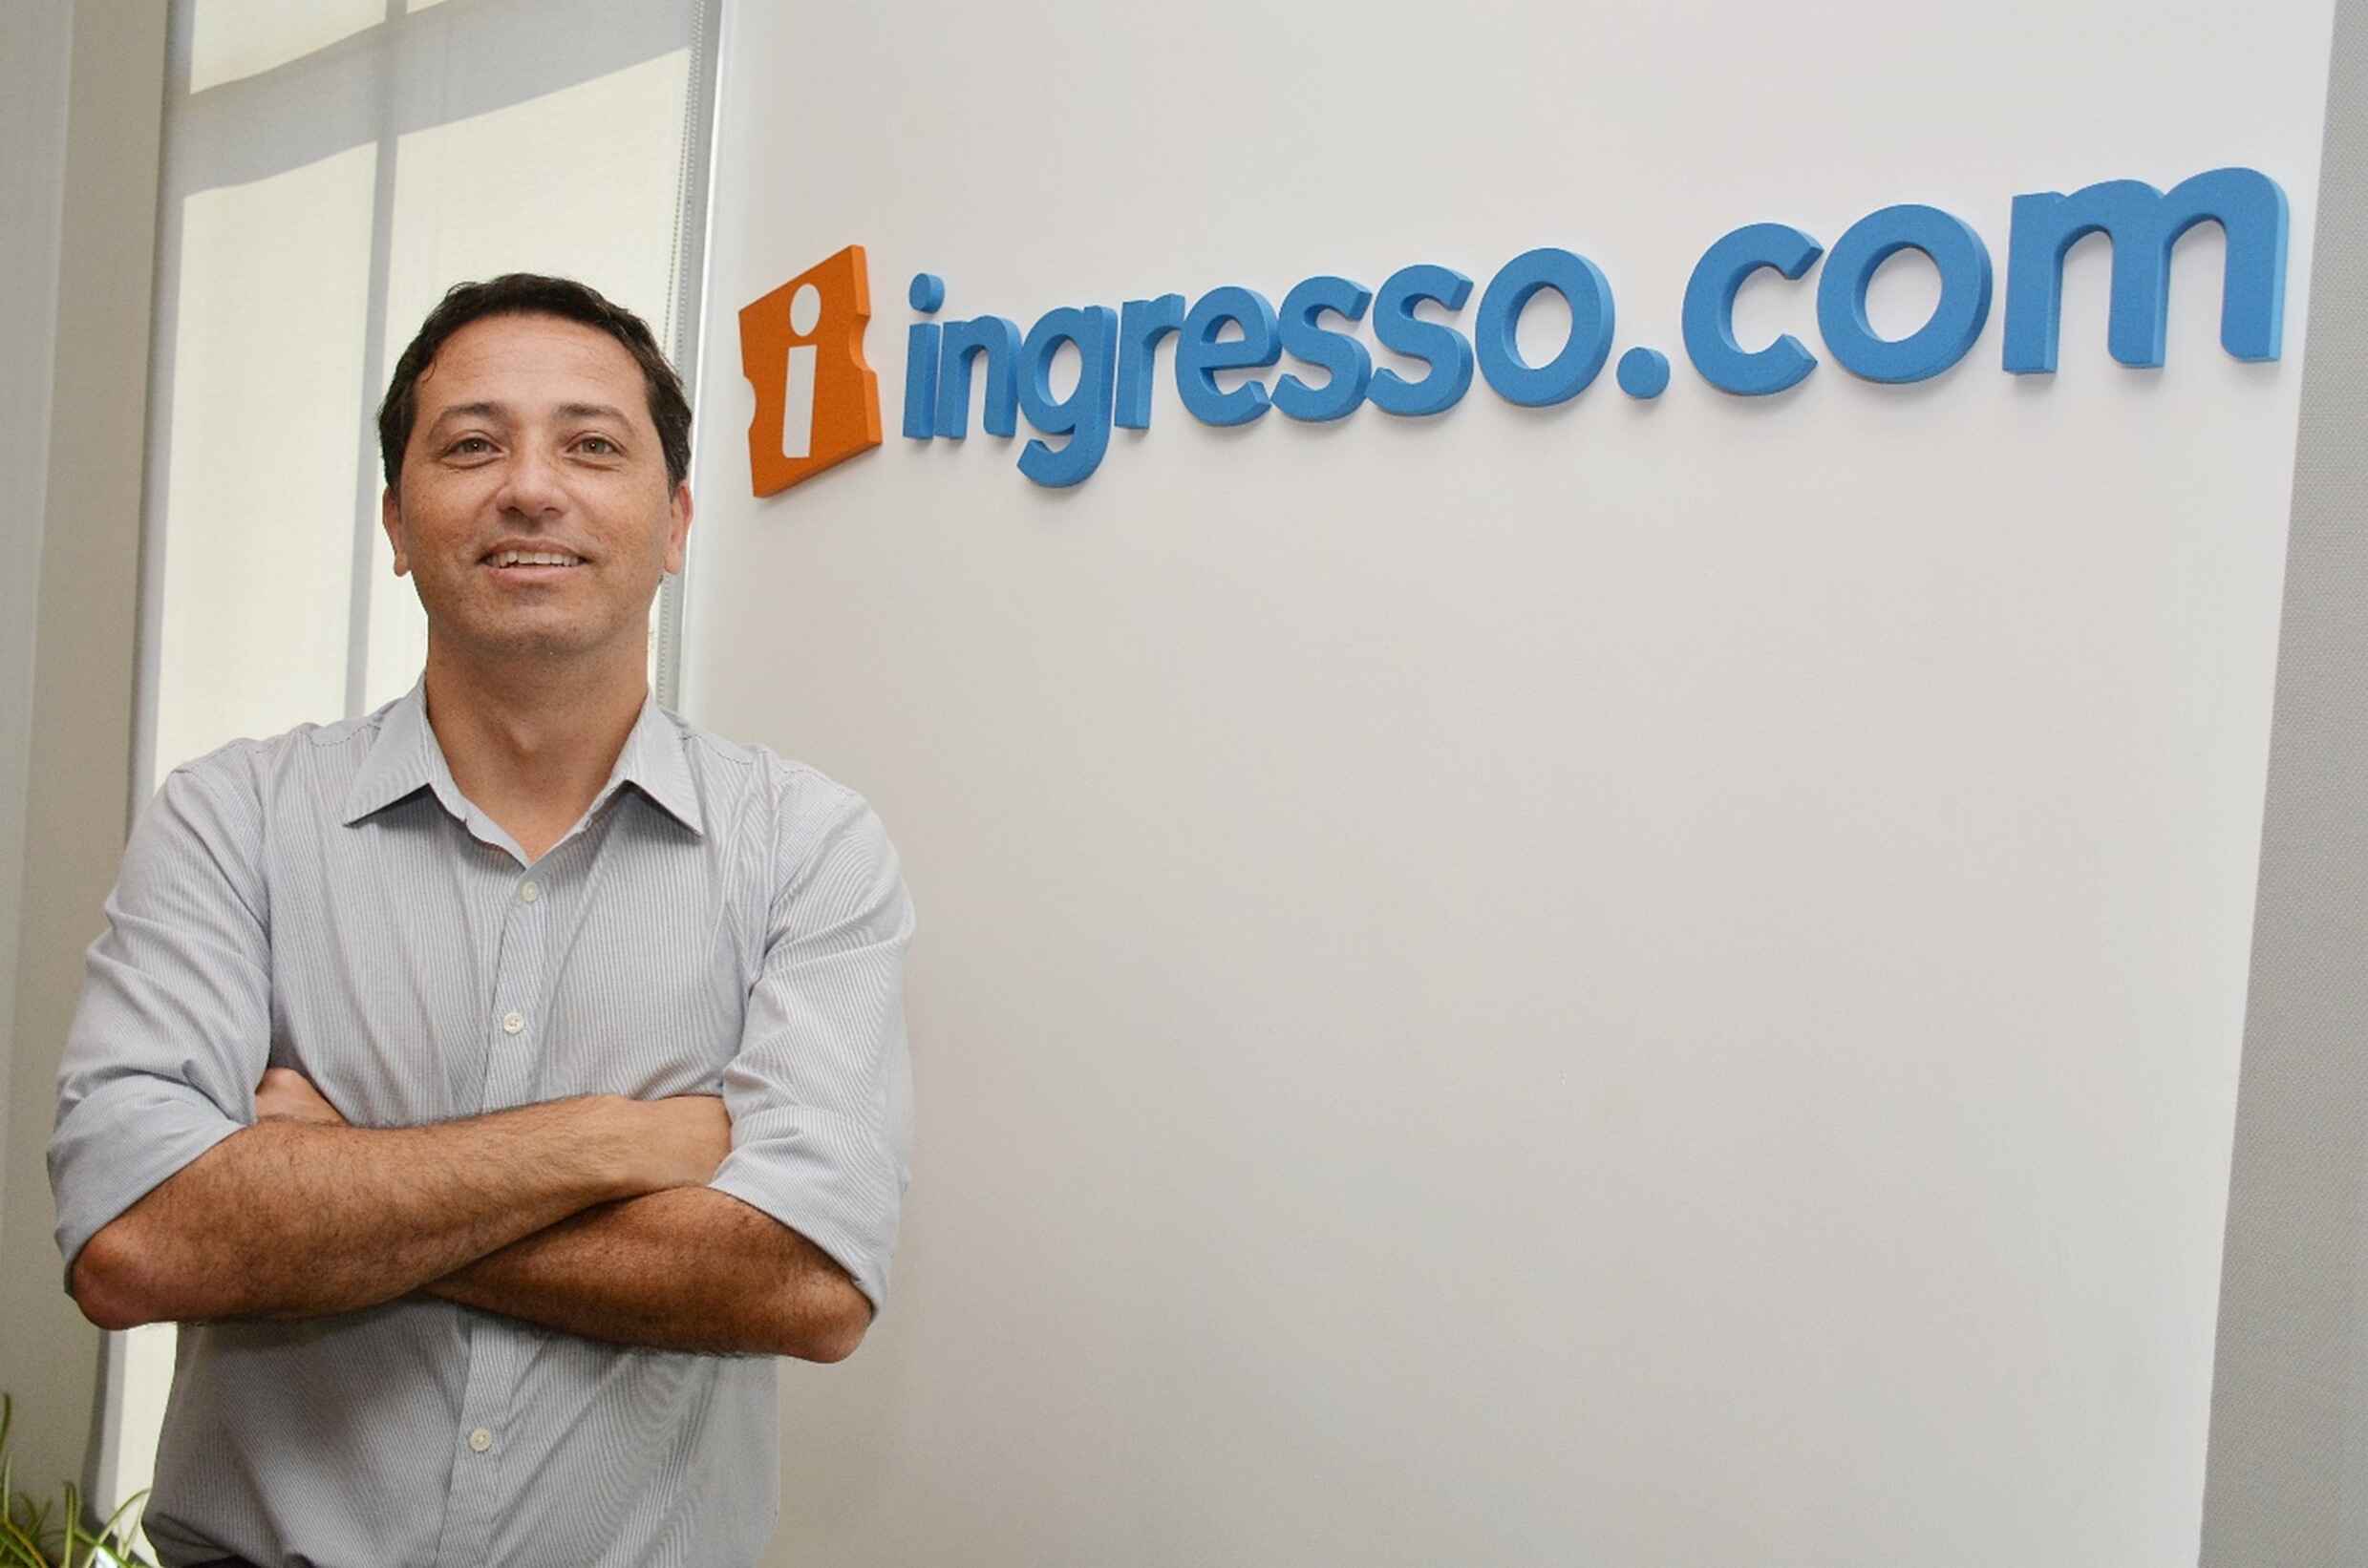 Roberto Jose Ingresso.com